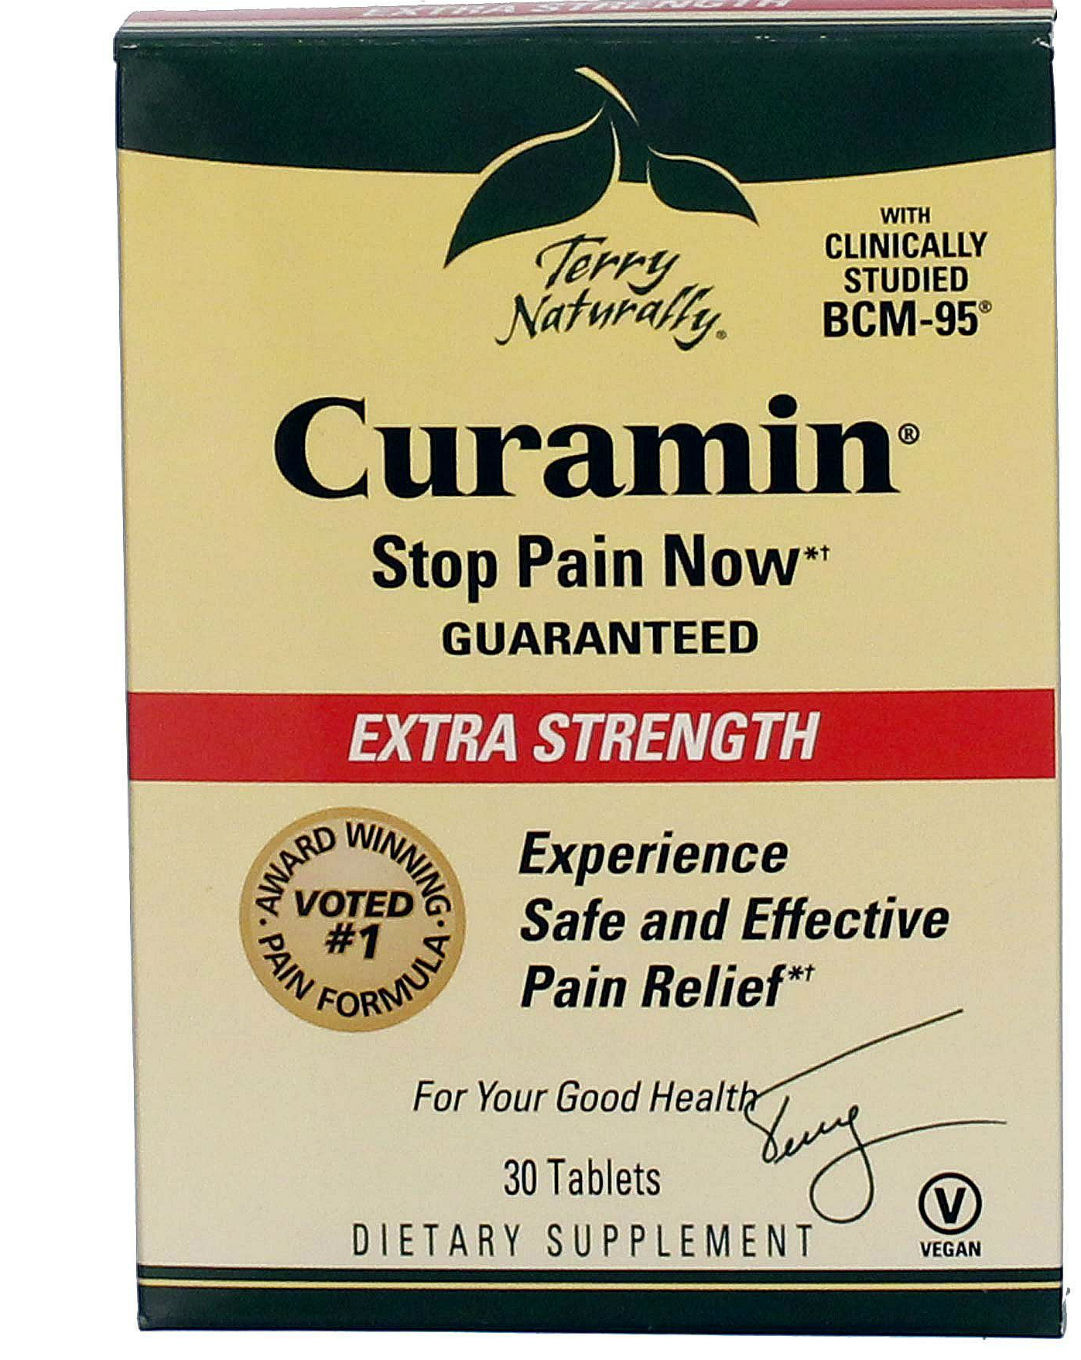 Europharma / Terry Naturally: Curamin Extra Strength Blister Pack 30 tabs